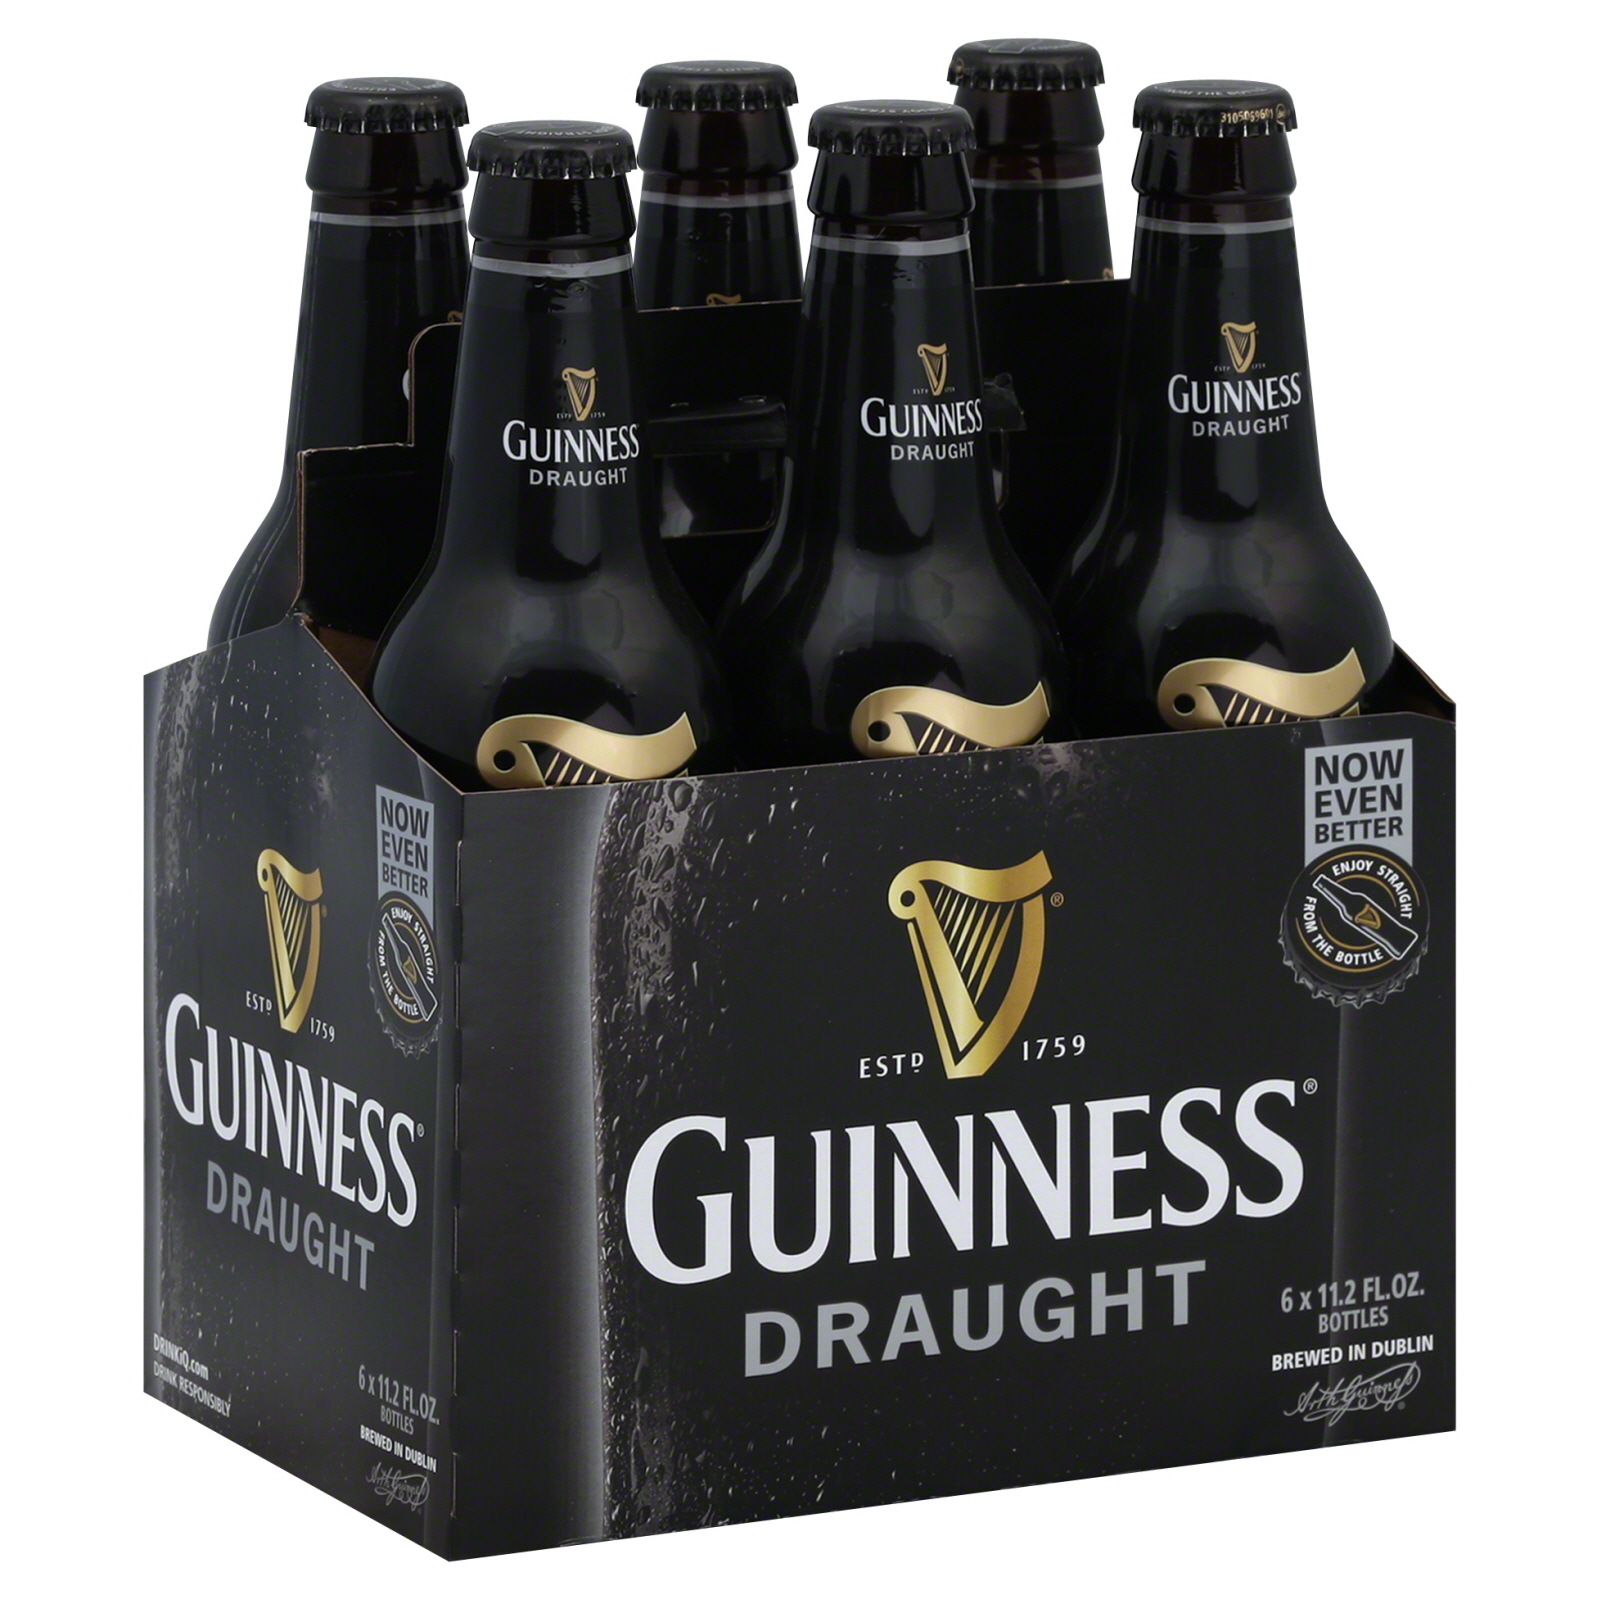 Guiness Draught Beer, 6 - 11.2 fl. oz. bottles